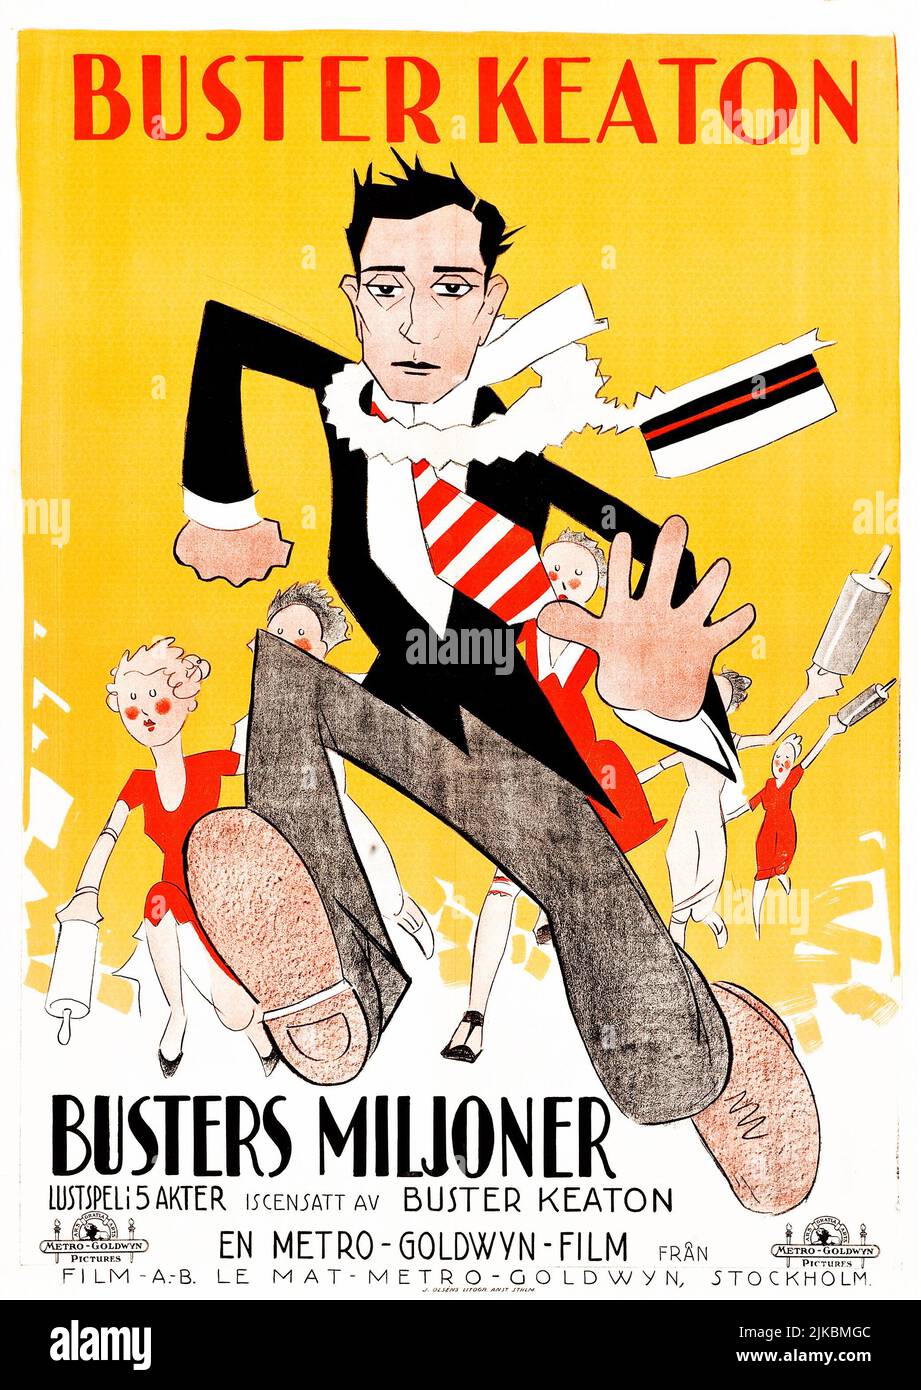 Busters miljoner - Sieben Chancen (Metro Goldwyn, 1925). Schwedisches Filmplakat feat Buster Keaton. Stockfoto